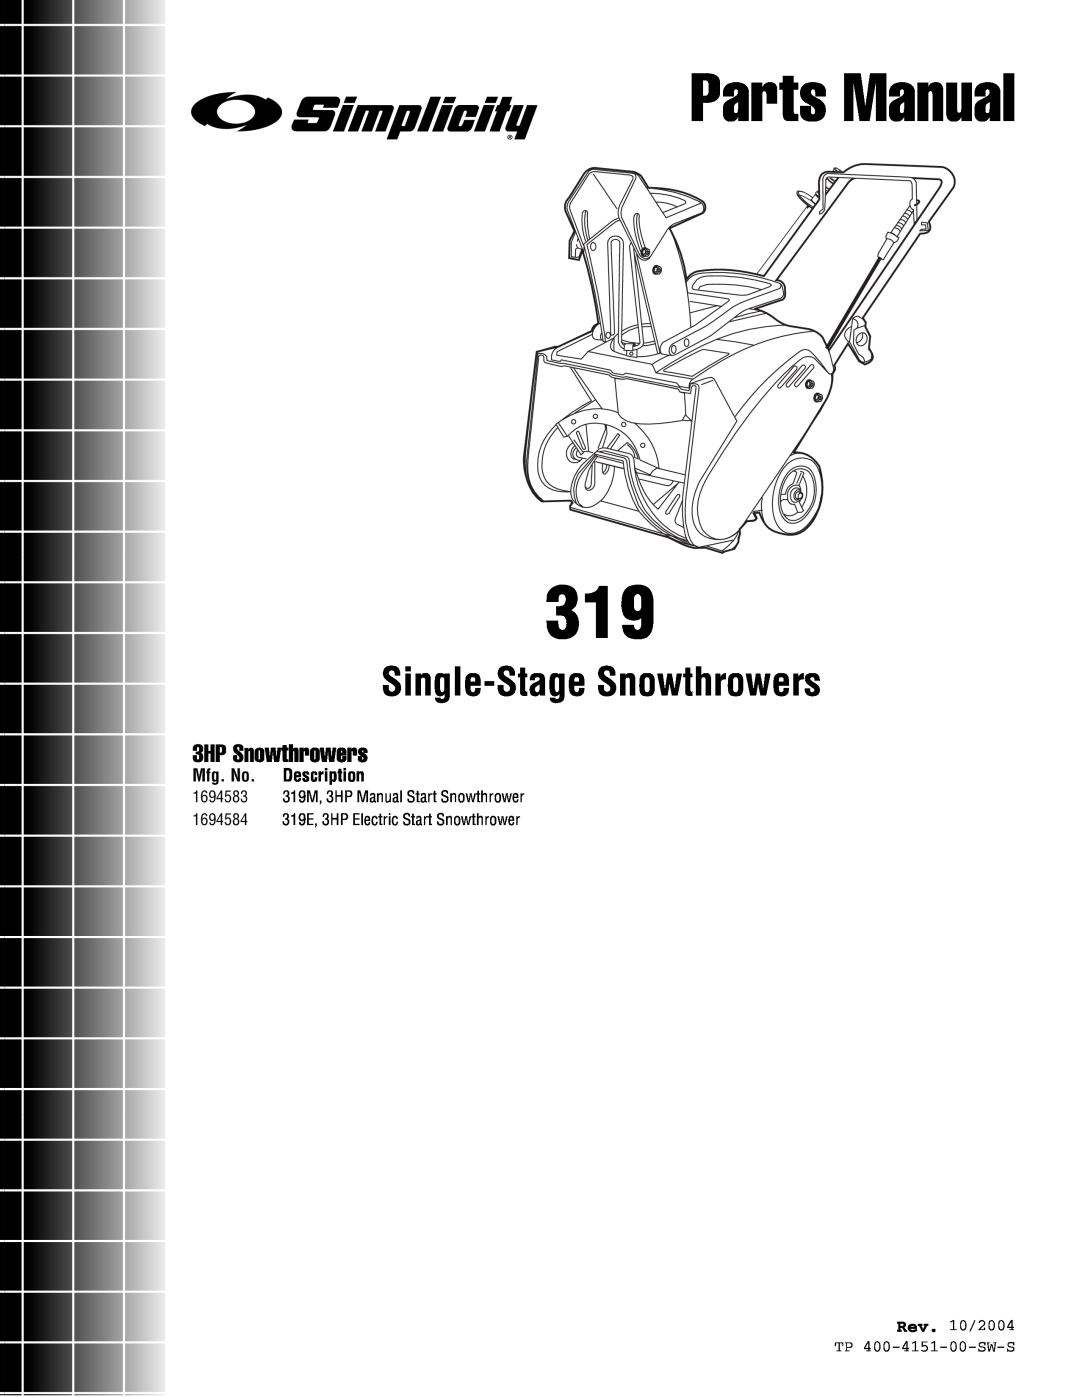 Simplicity 319E manual Mfg. No. Description, Rev. 10/2004 TP 400-4151-00-SW-S, Parts Manual, Single-StageSnowthrowers 